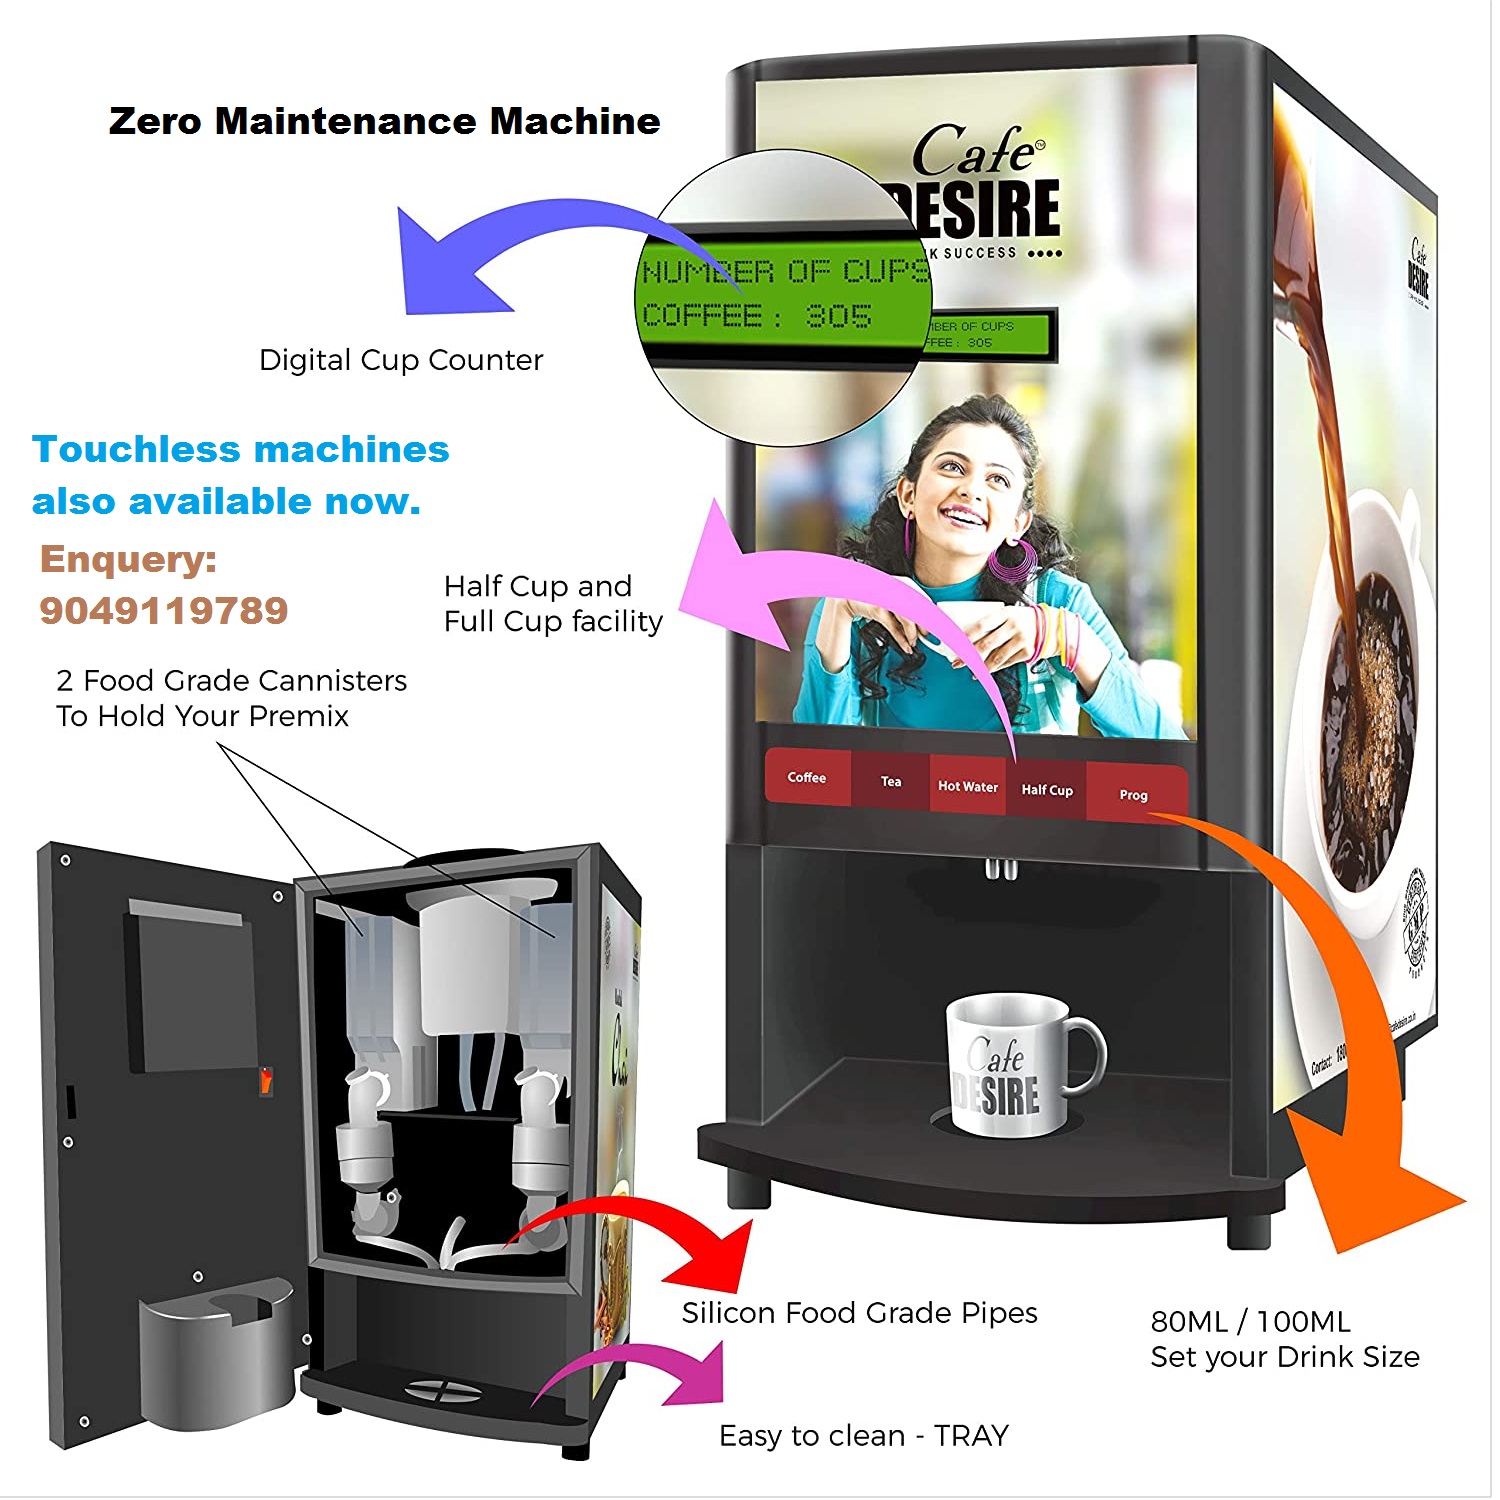 2 Lane Tea-Coffee Vending Machine from Laxmi Cafe Desire